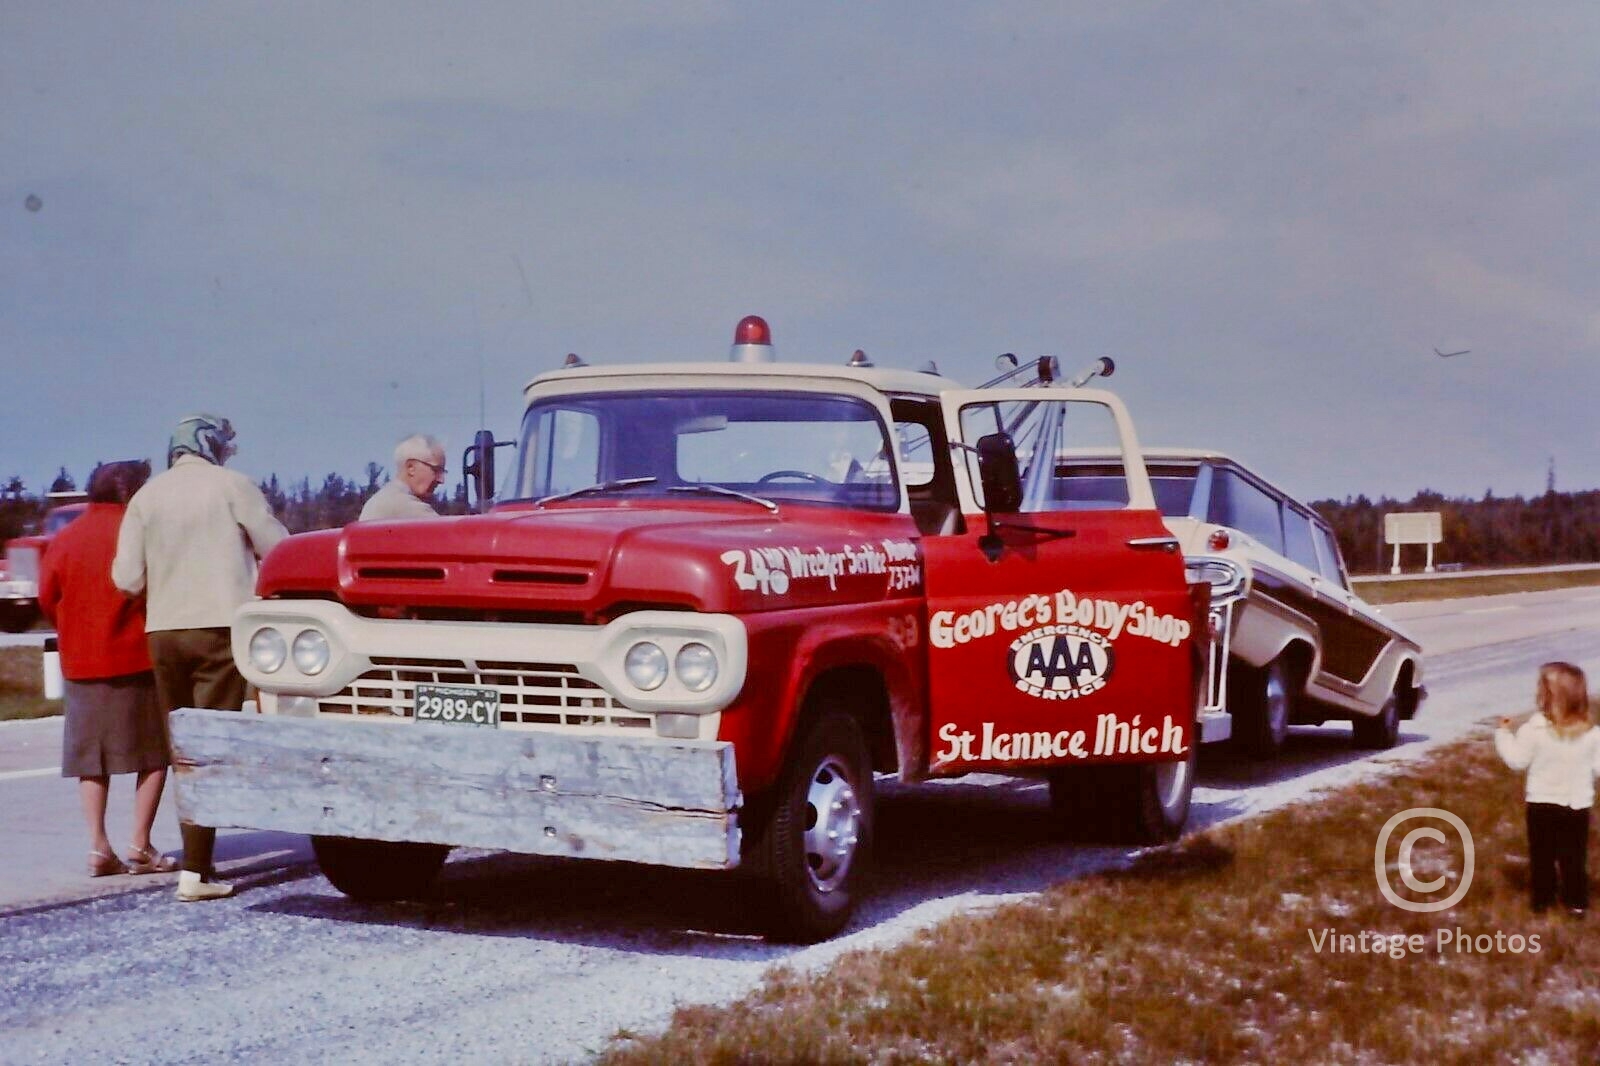 1963 AAA Tow Truck, George's Body Shop, St Ignace, Michigan USA